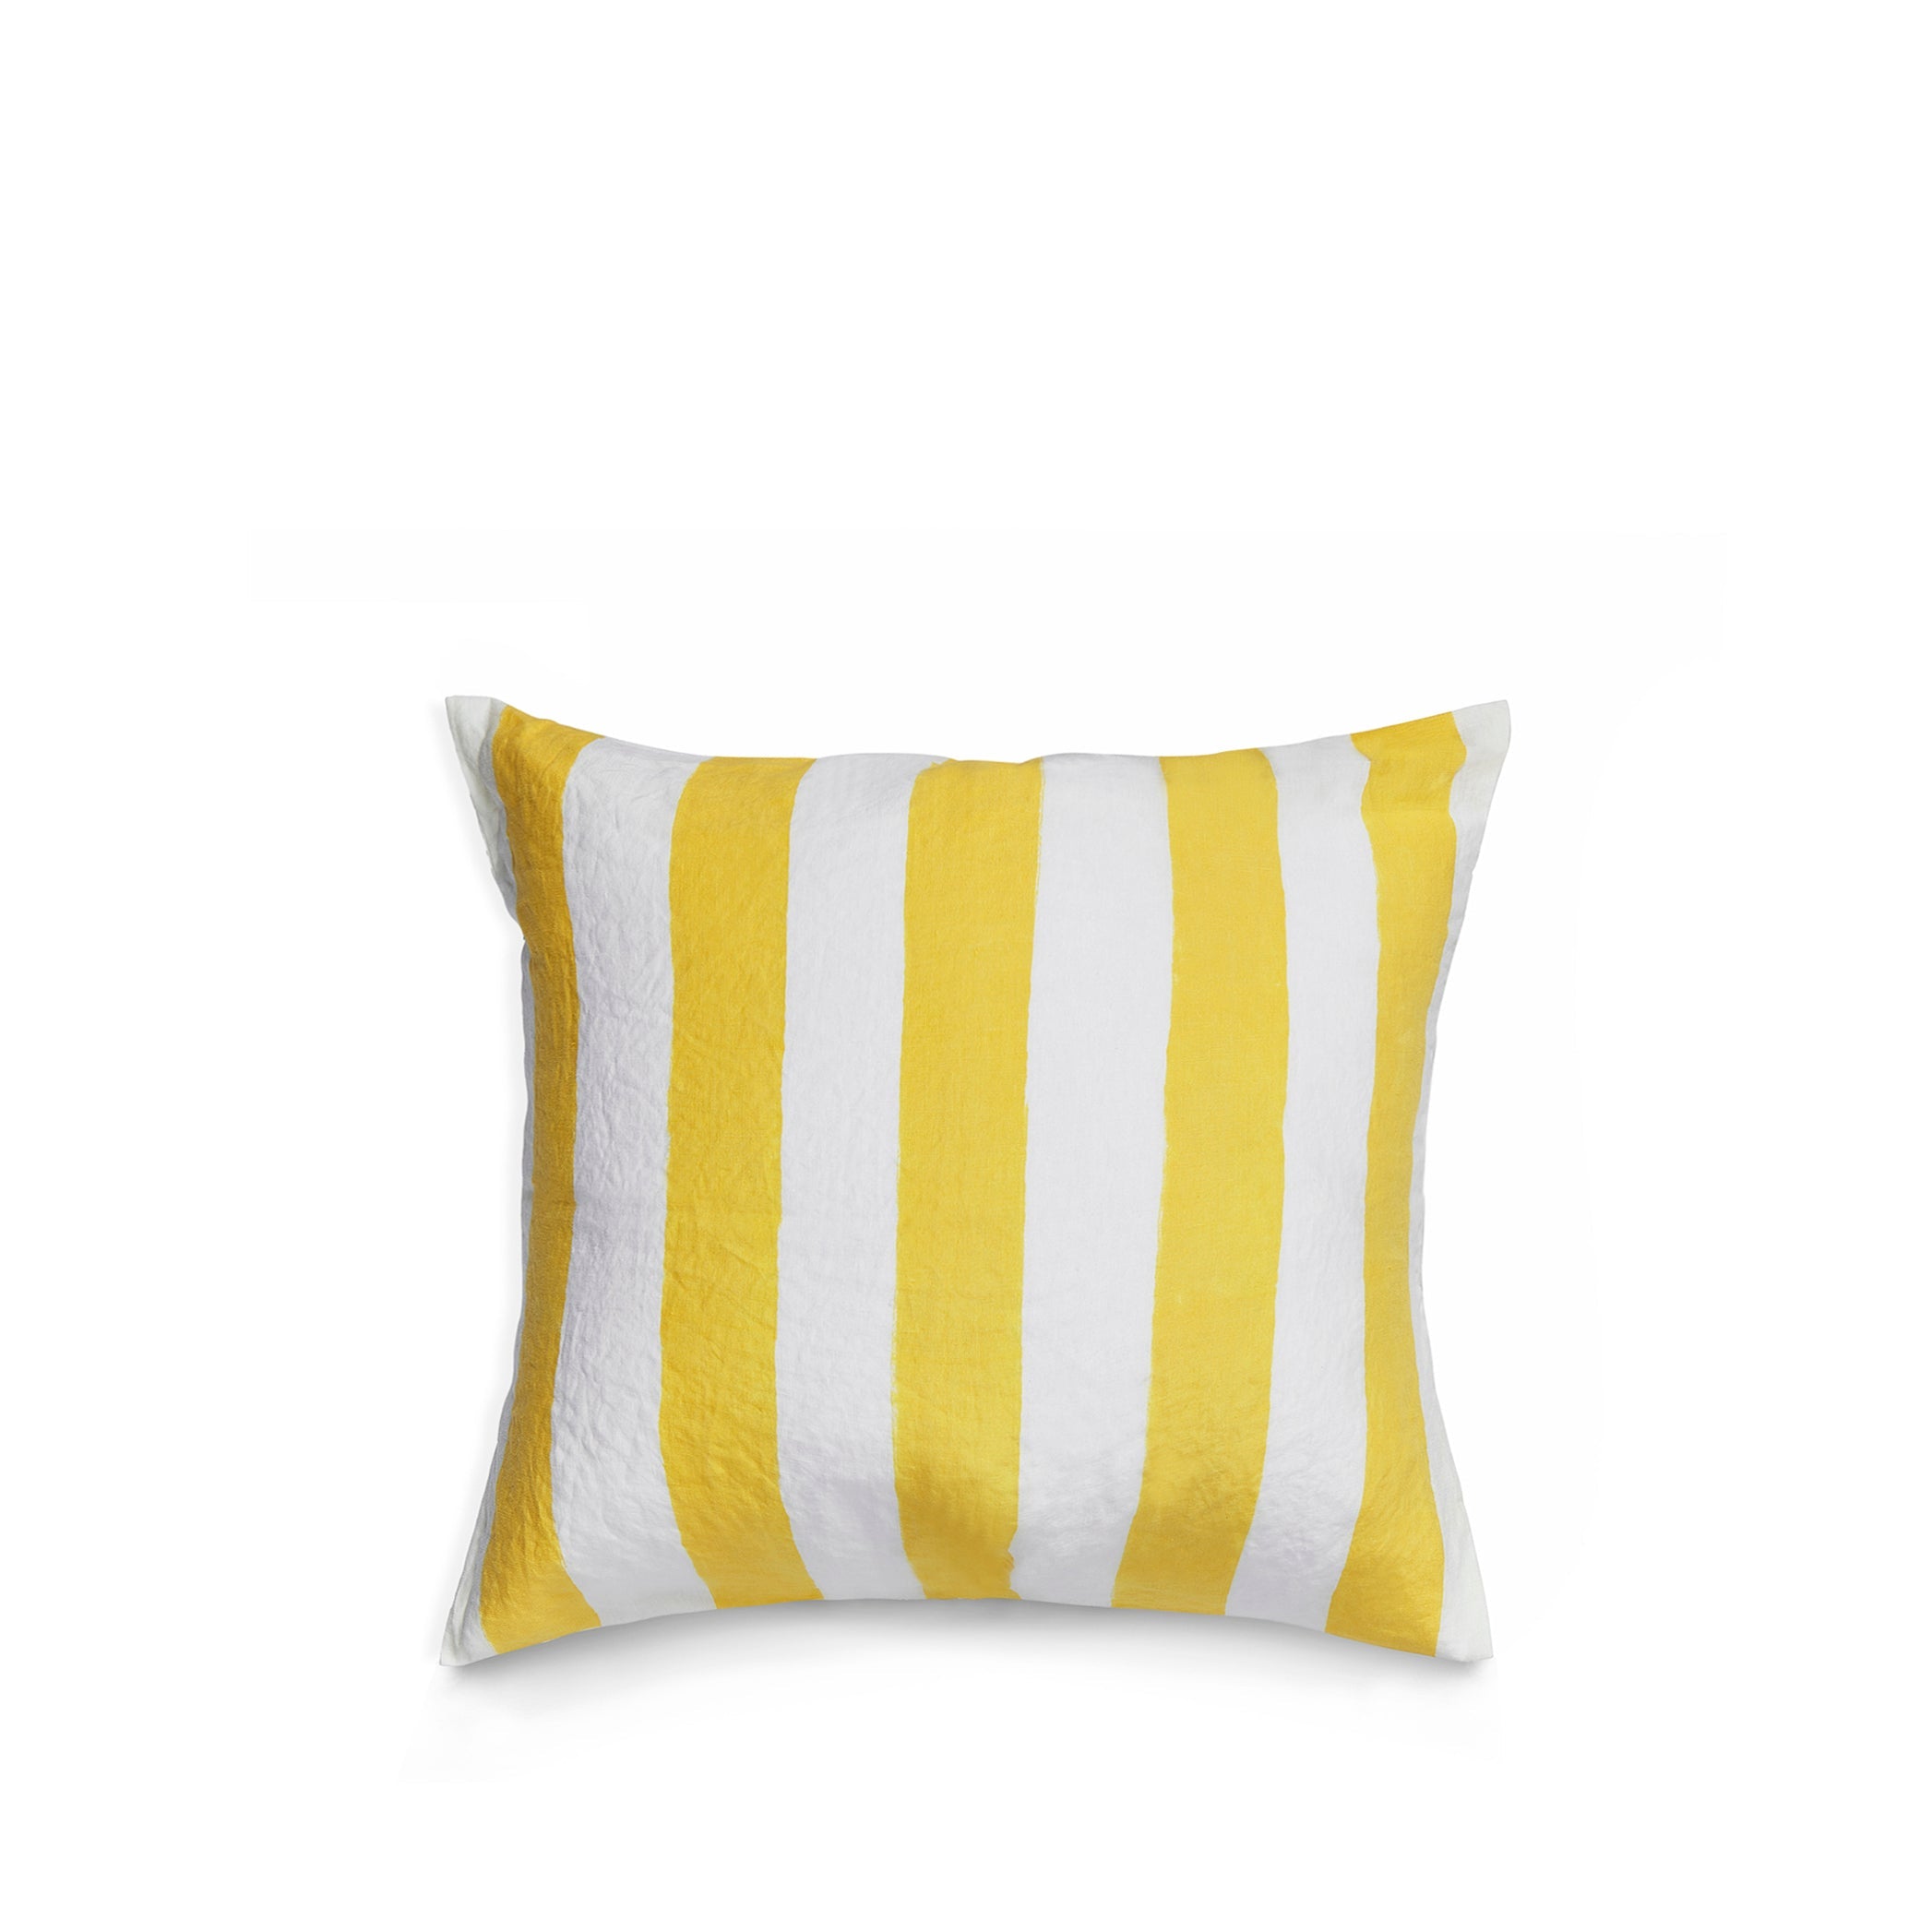 Hand Painted Stripe Linen Cushion in Lemon Yellow + White, 50cm x 50cm